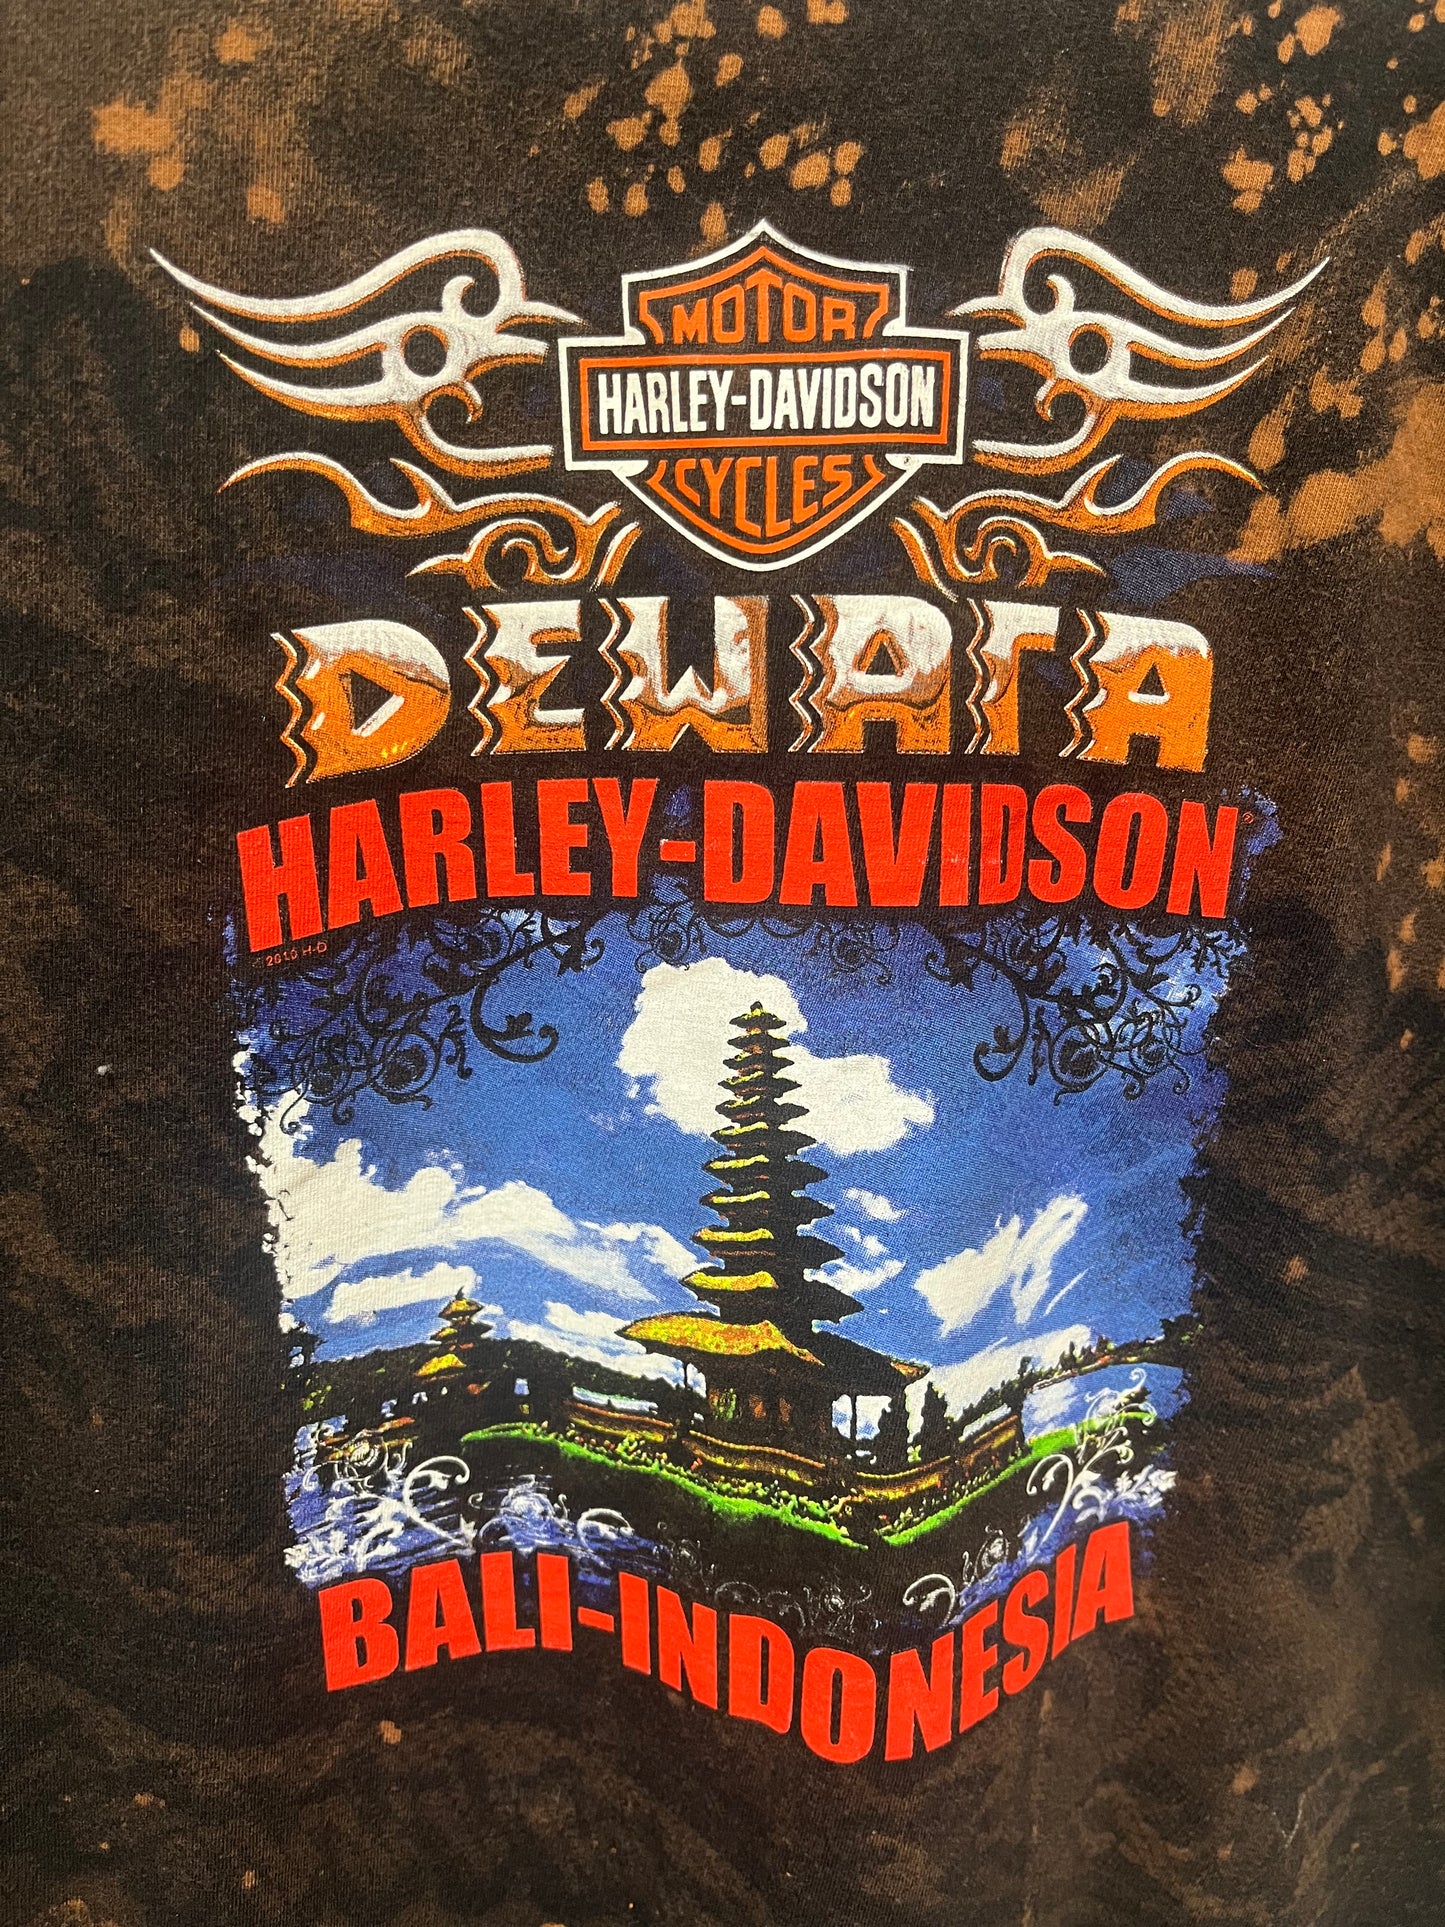 Vintage Harley Davidson Tee - BALI - INDONESIA